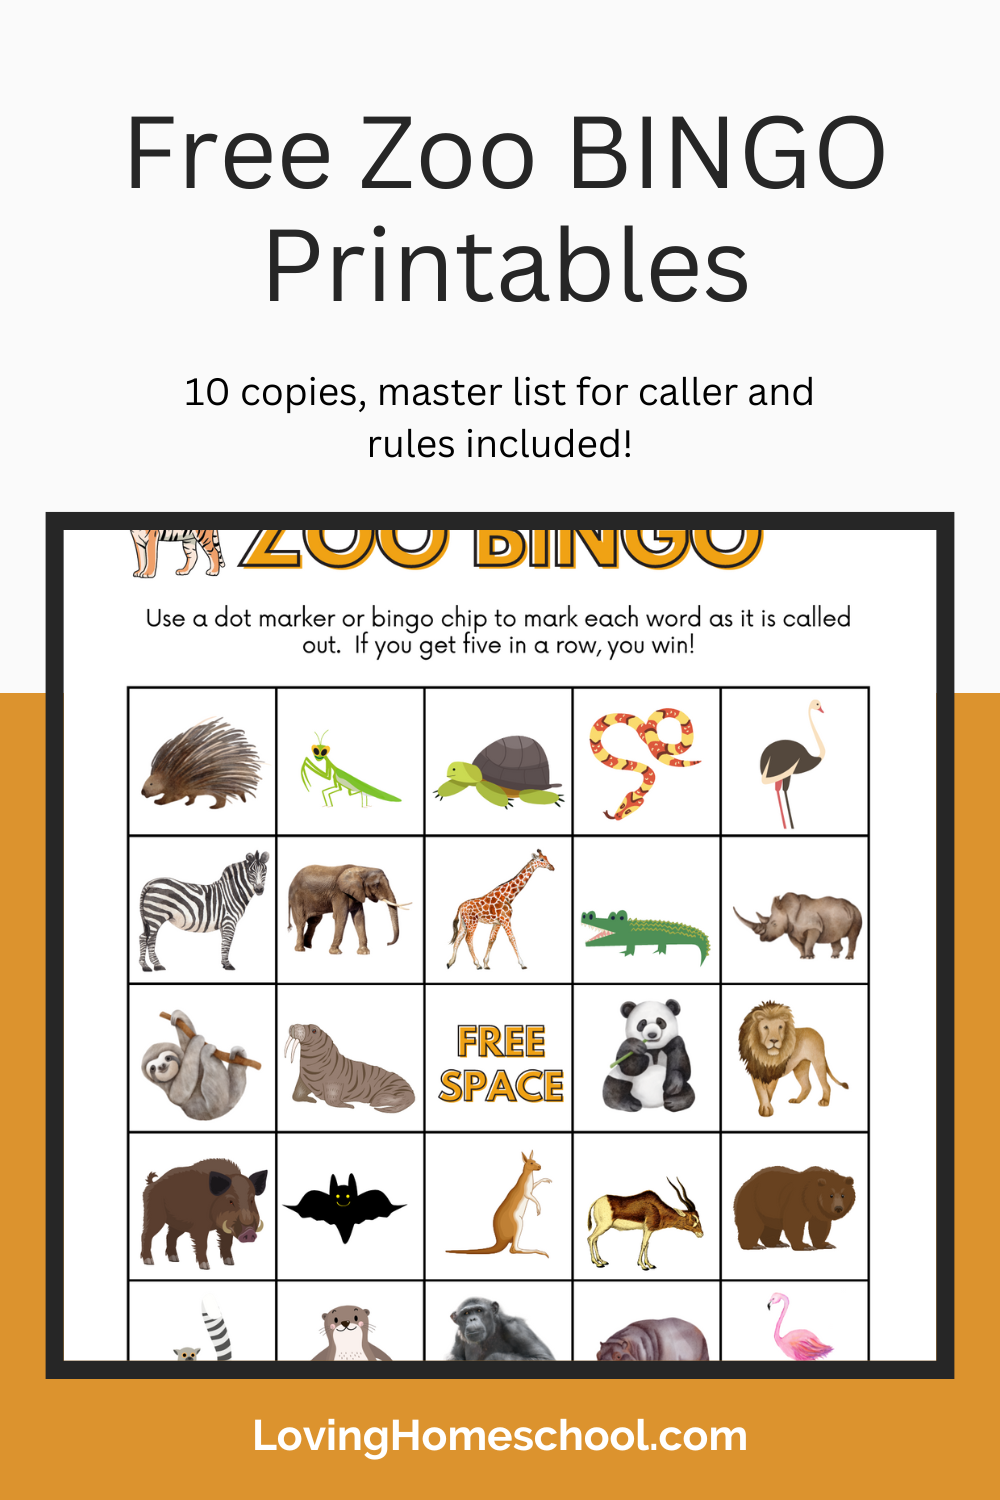 Free Zoo BINGO Printables Pinterest Pin